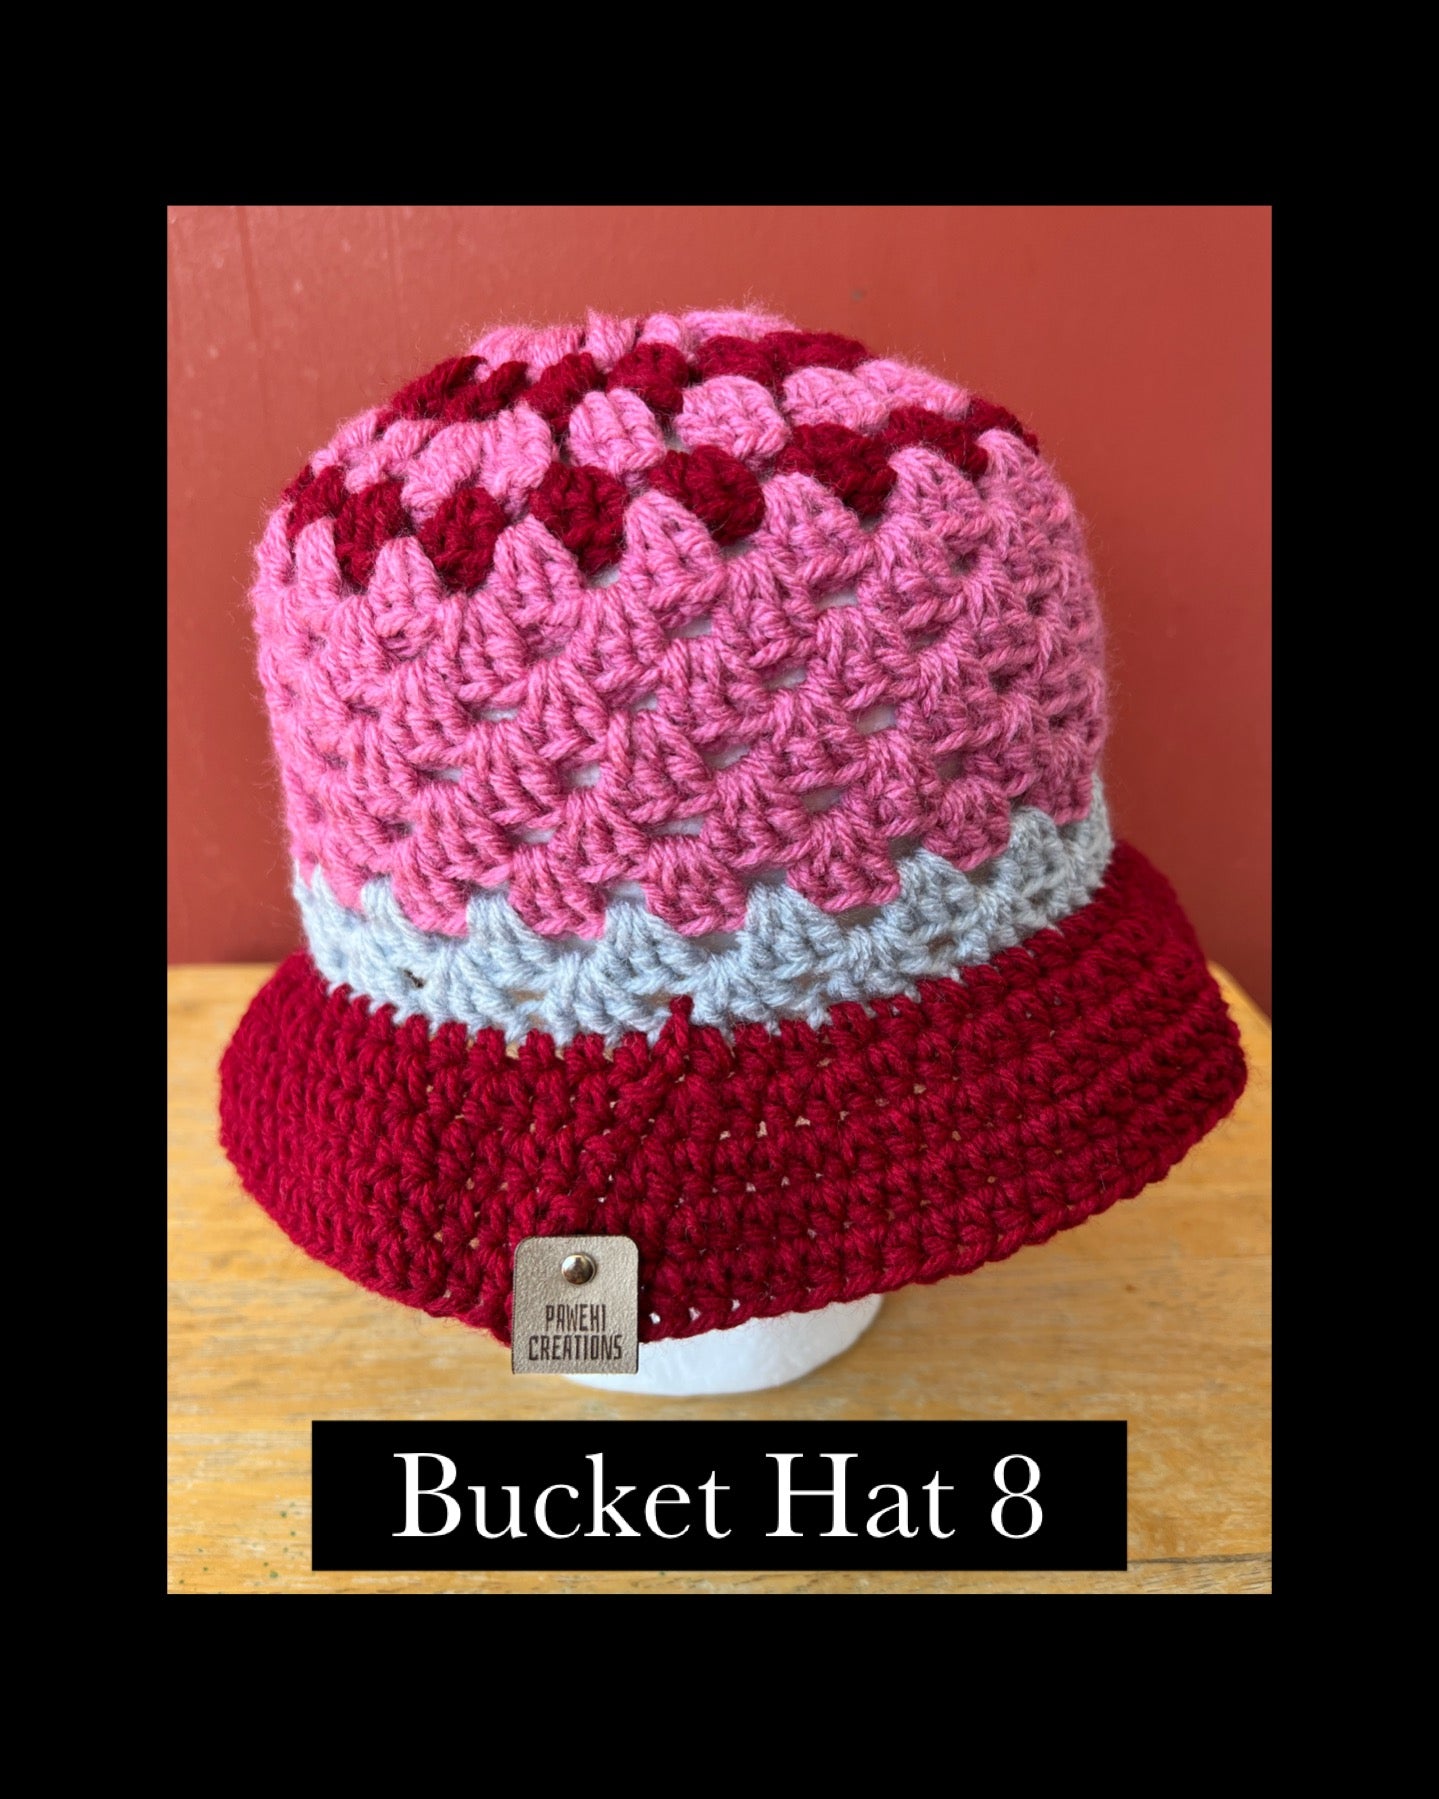 Pop-Up Mākeke - Pawehi Creations - Crochet Bucket  Hat - Style #8